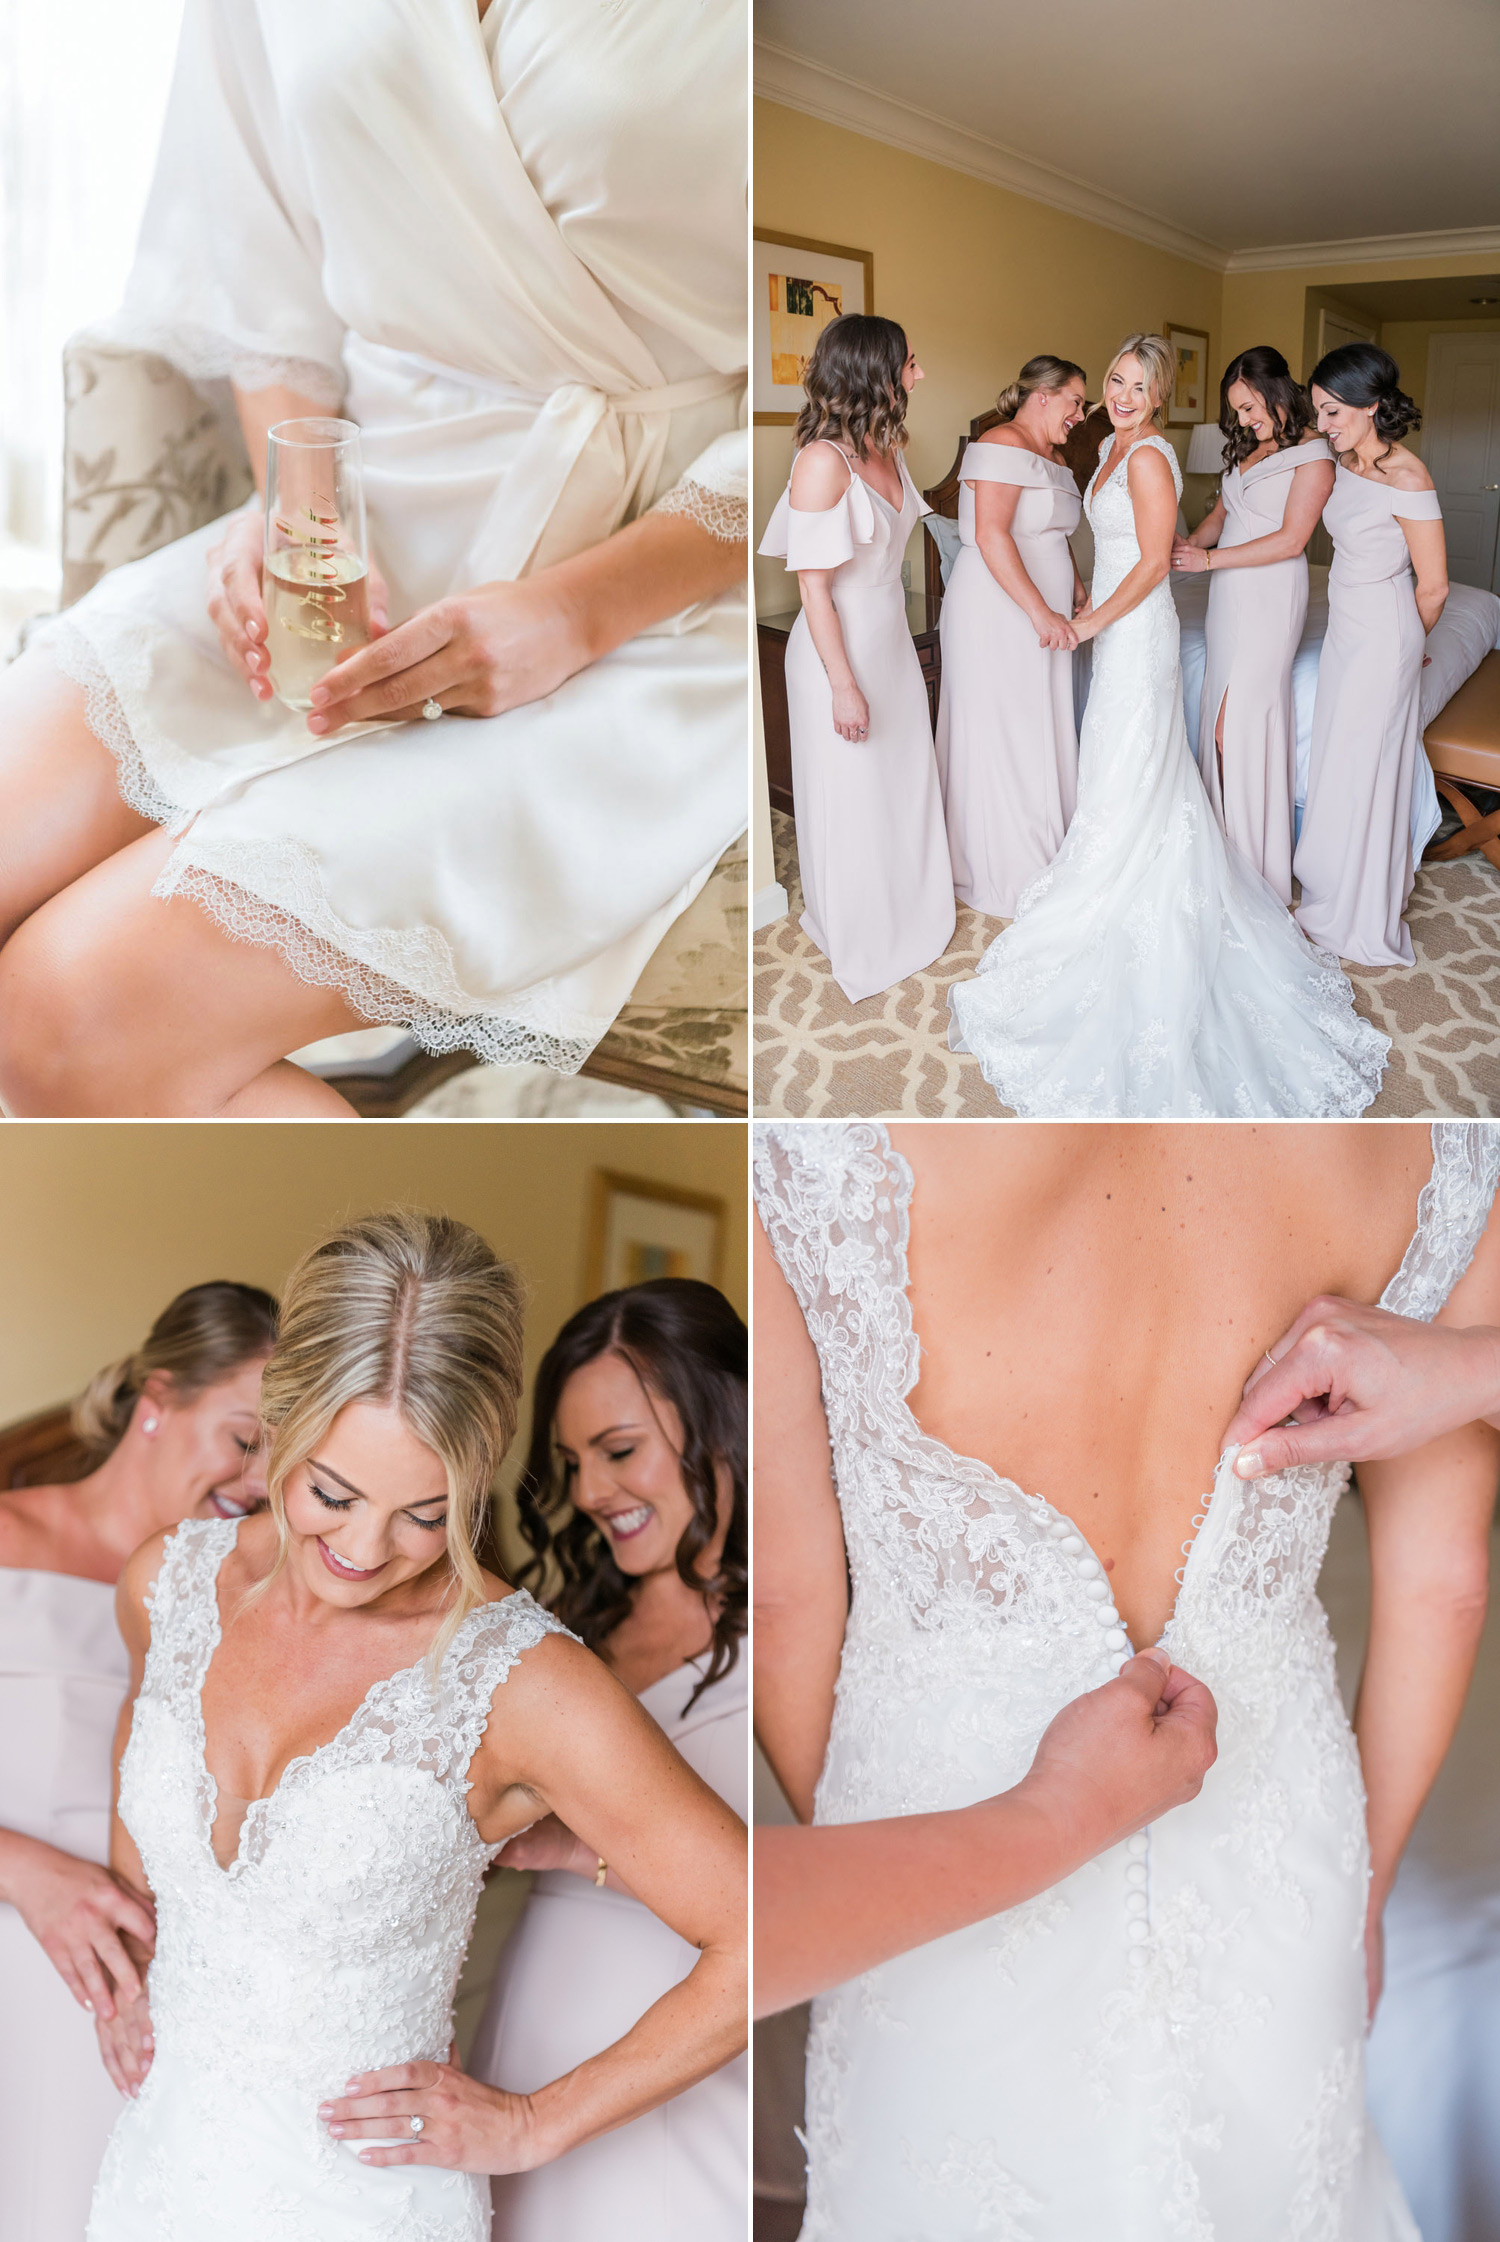 Hilton Lake Las Vegas Wedding Photography | Kristen Marie Weddings + Portraits